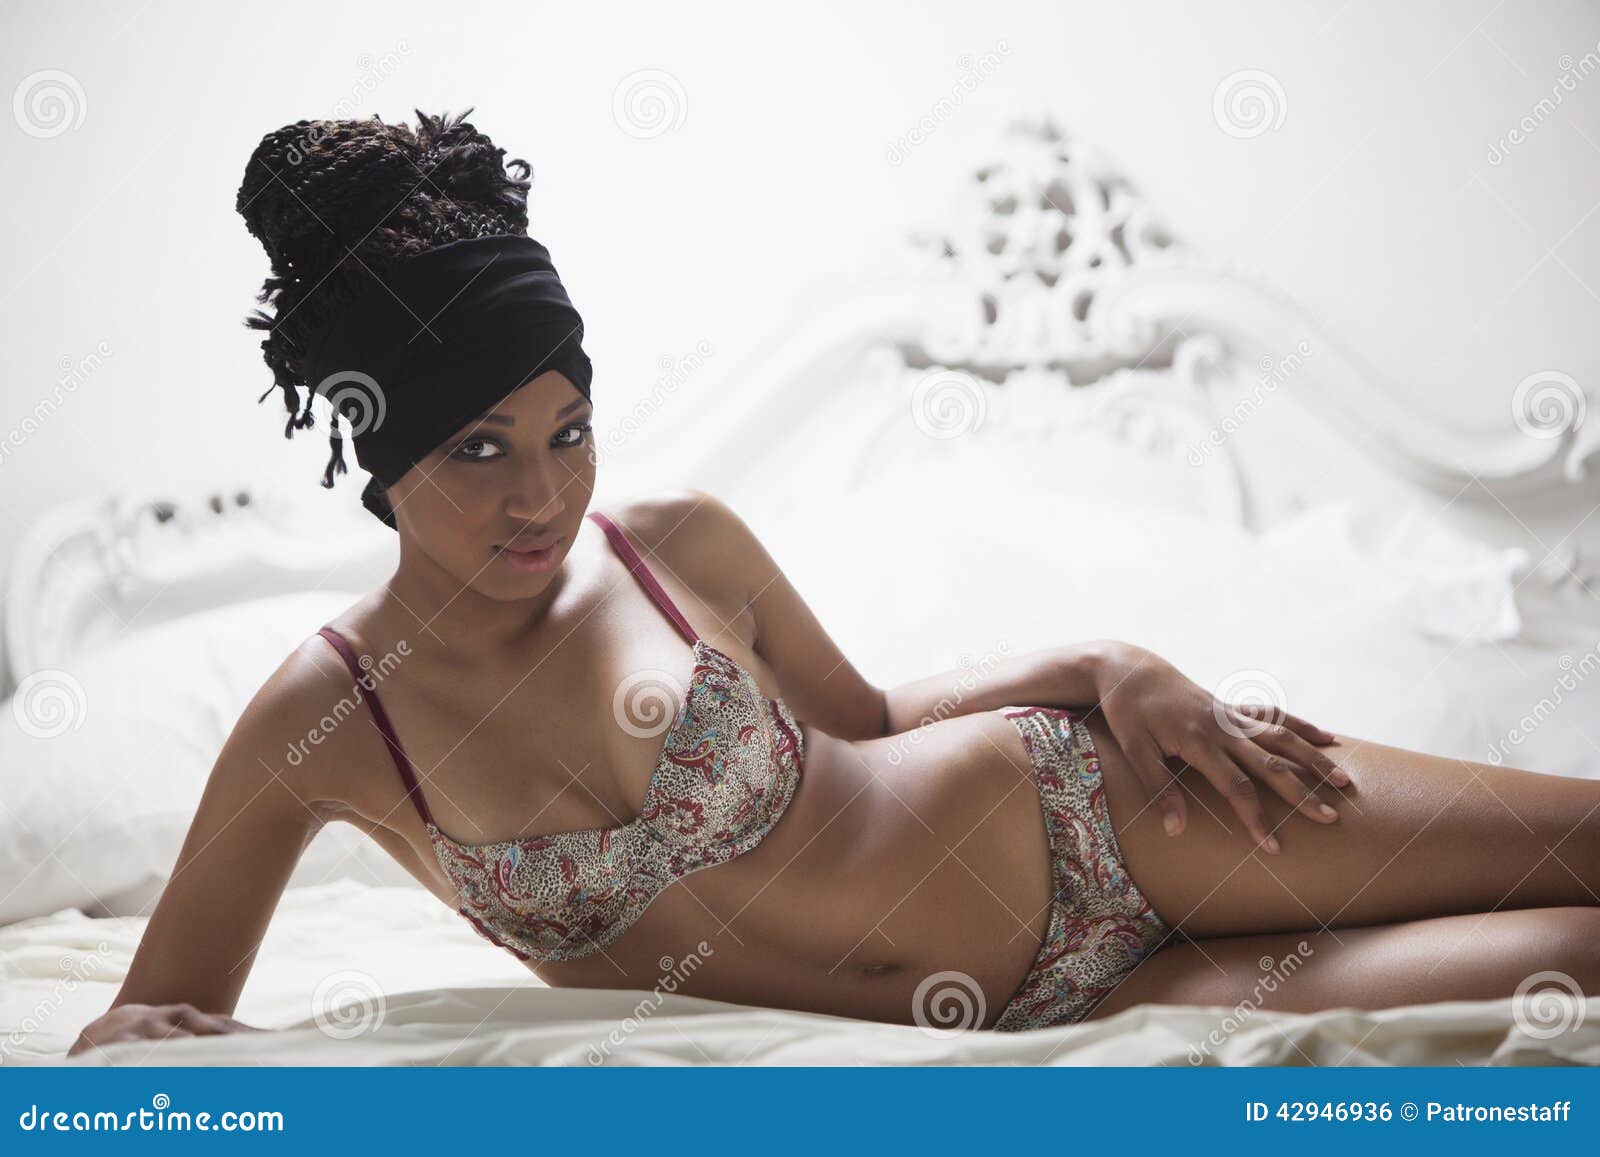 Pretty girl portrait wearing underwear Stock Photo by ©patronestaff